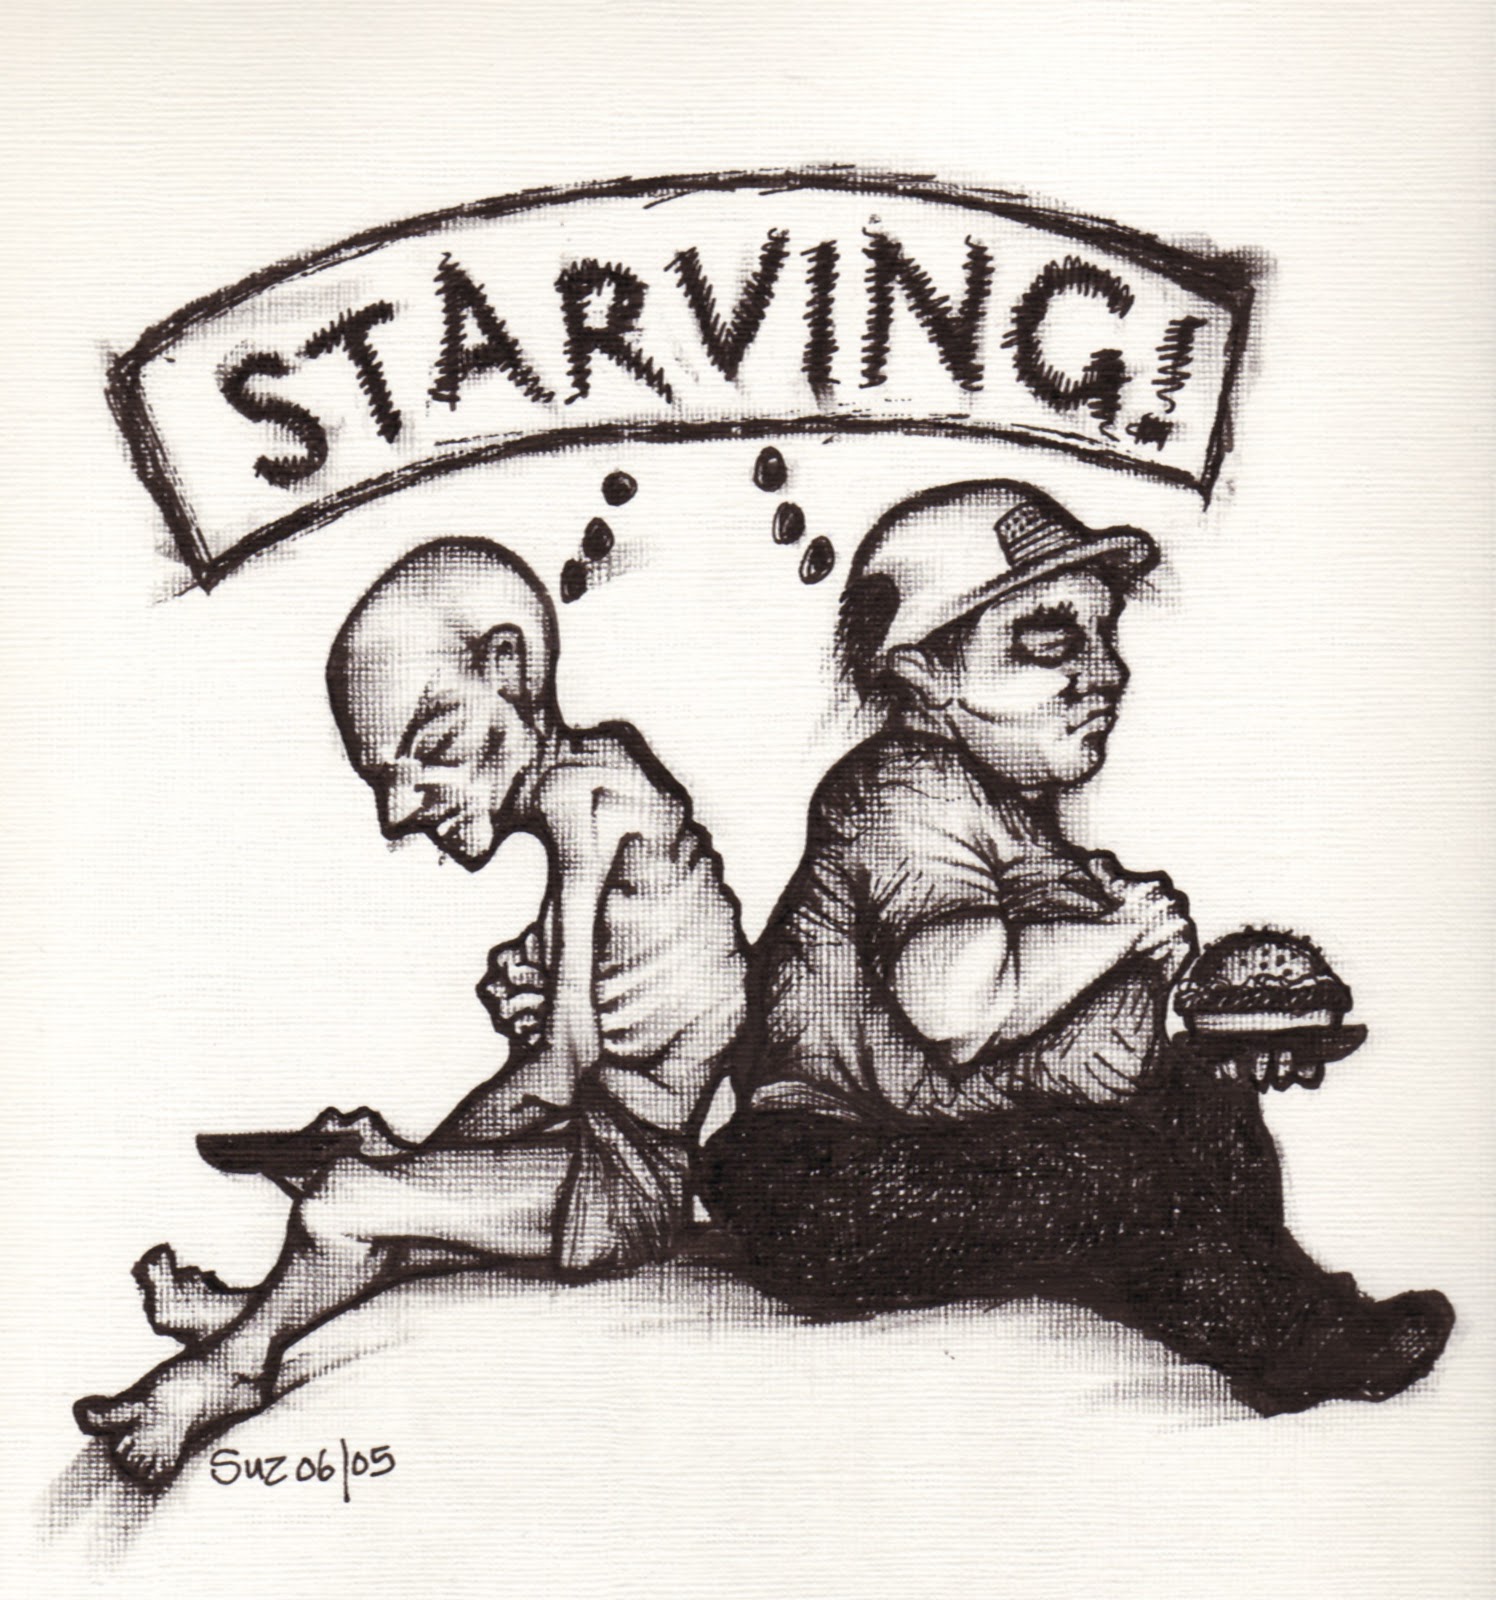 Starving help. Starving artists рисунки.